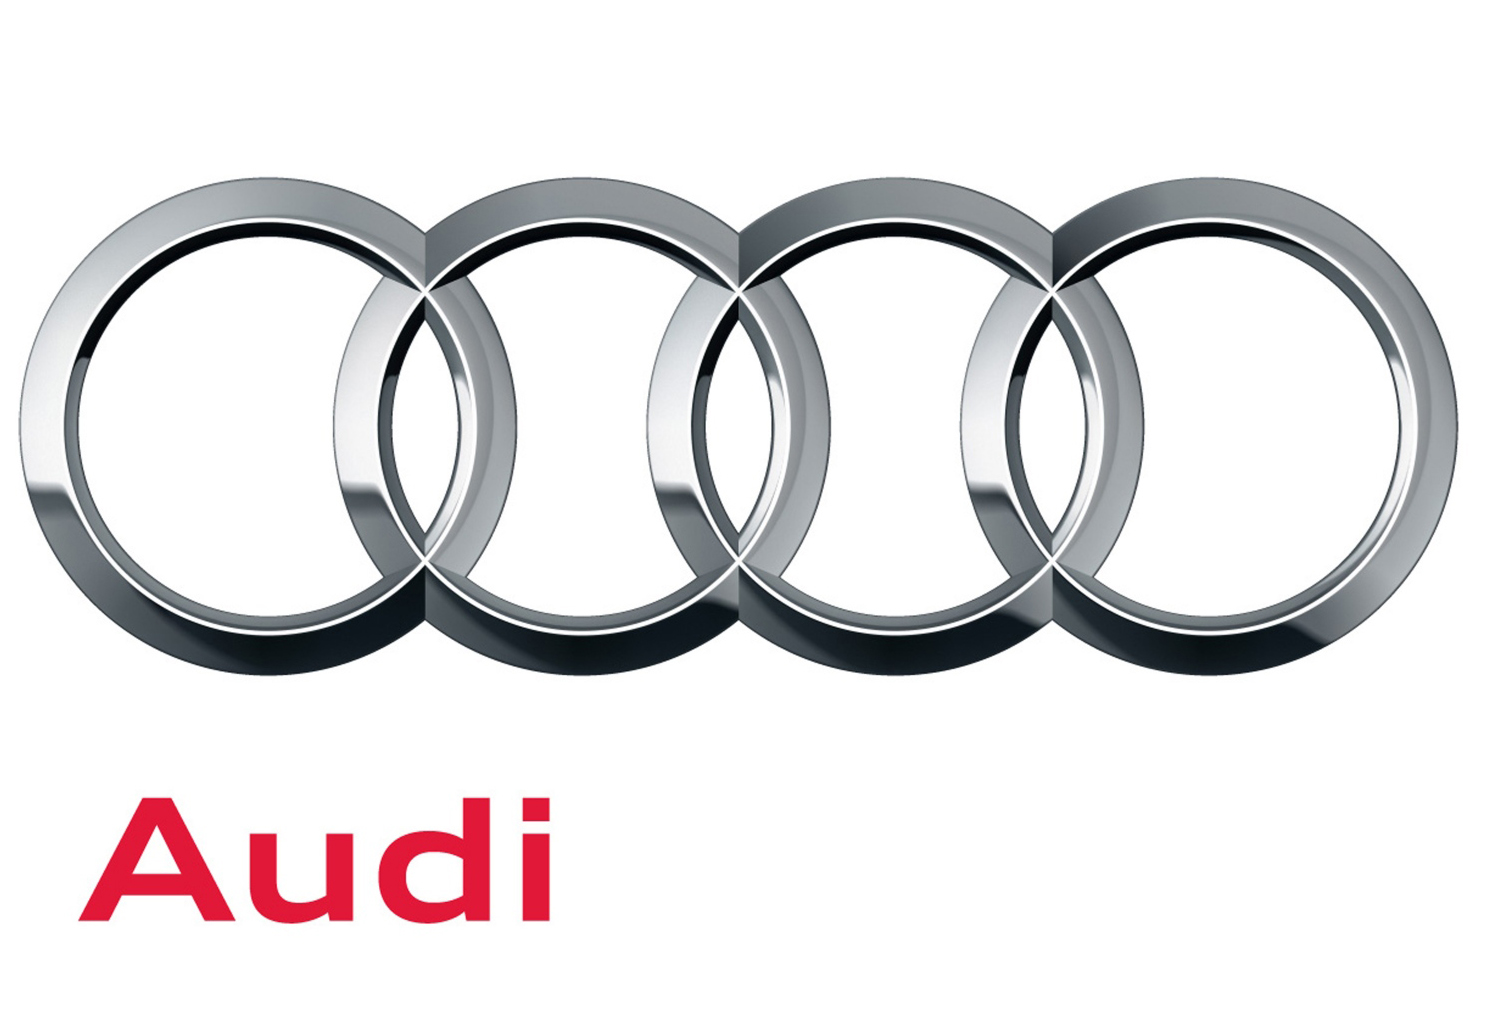 Audi ebikes